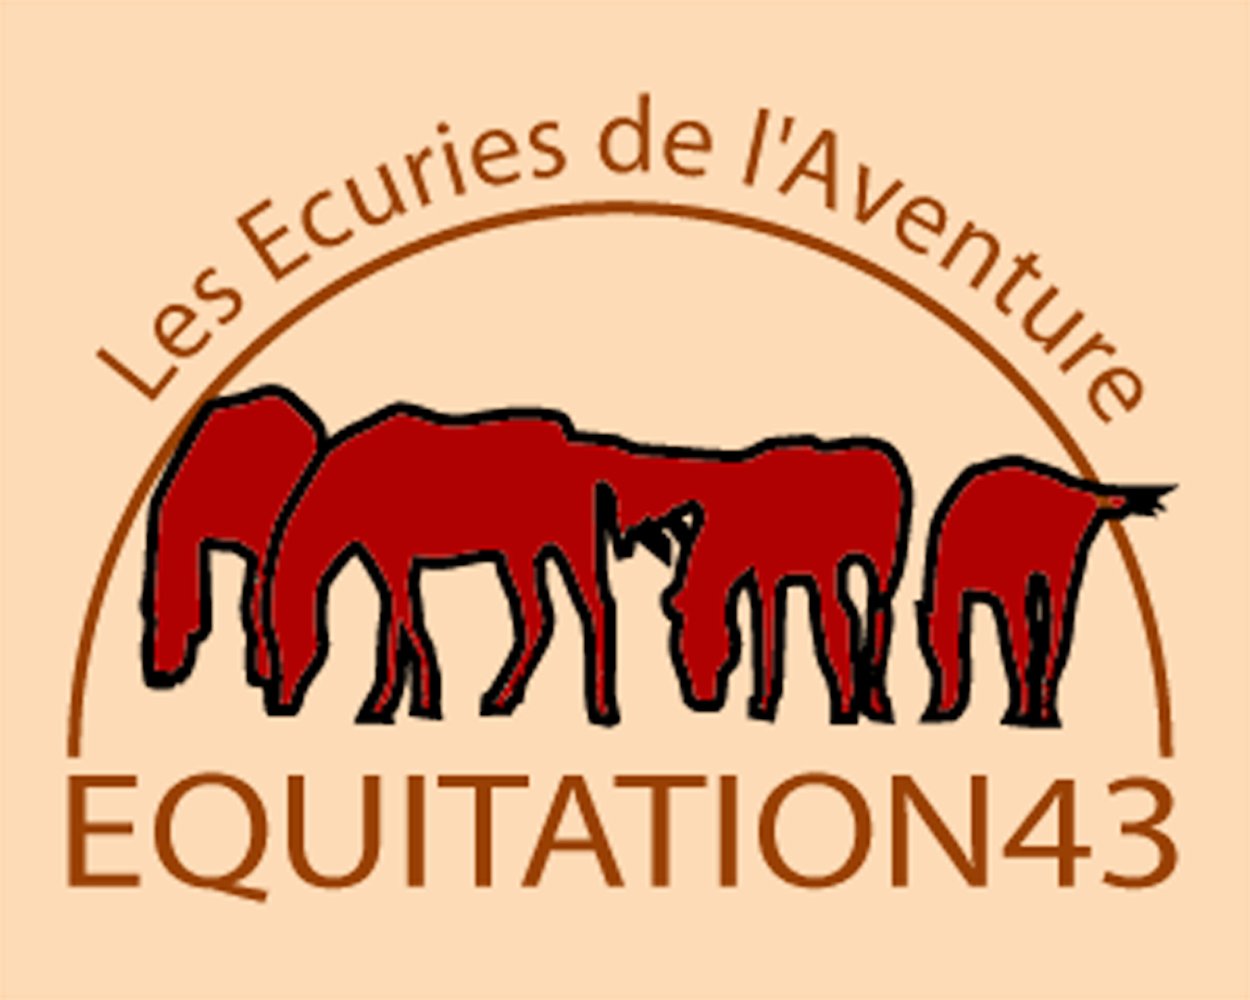 Equitation43